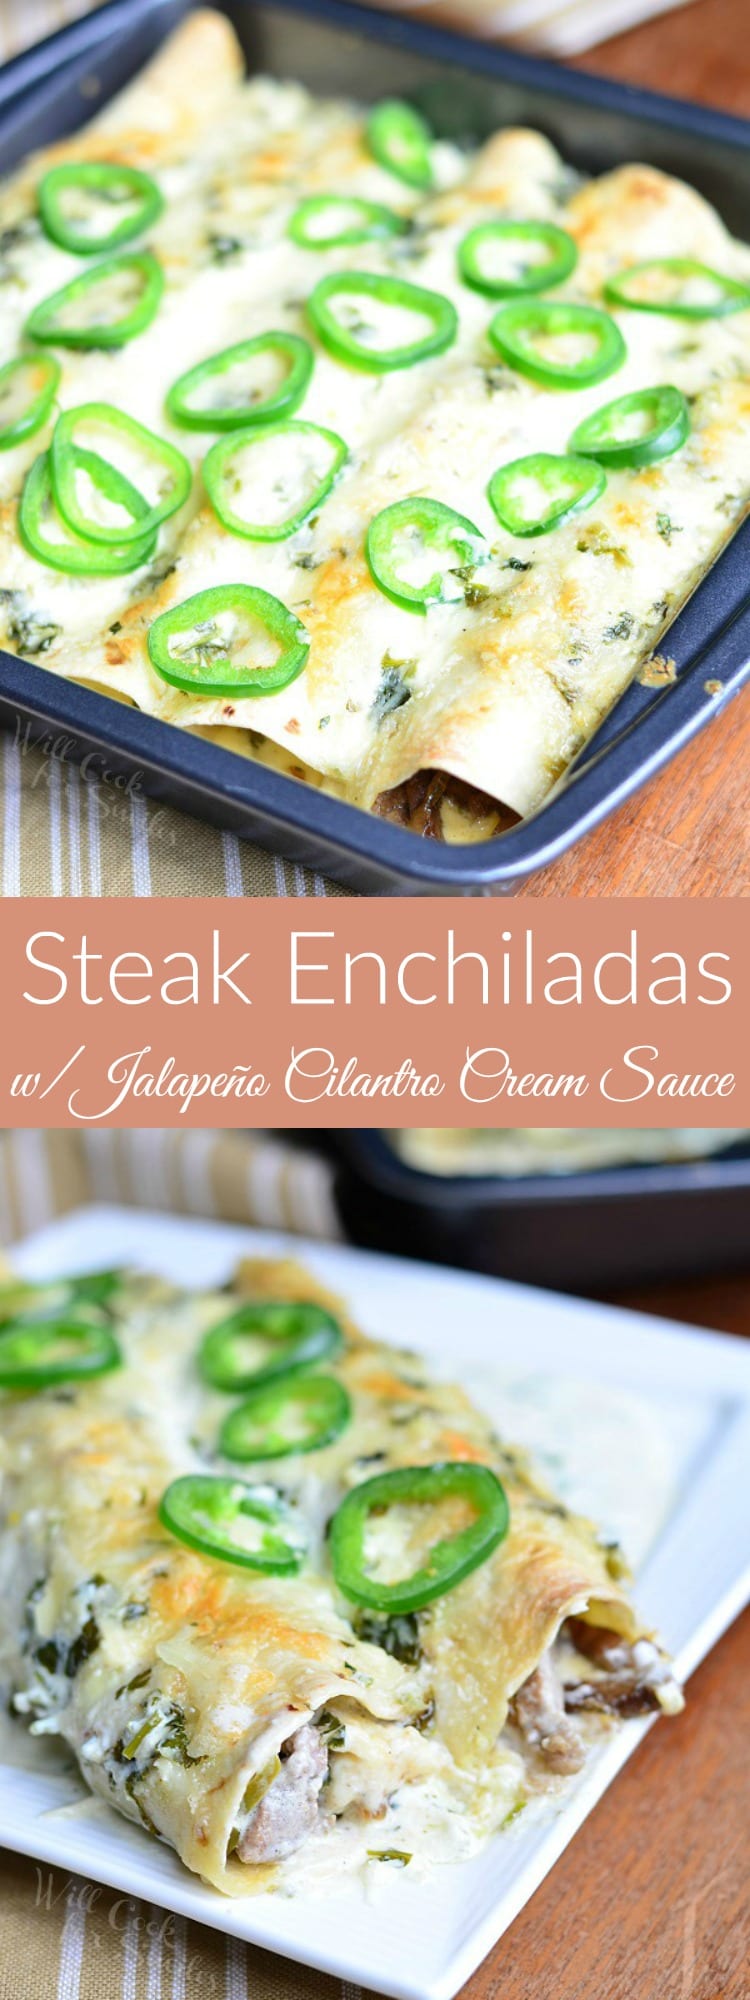 Steak Enchiladas with Jalapeño Cilantro Cream Sauce. 